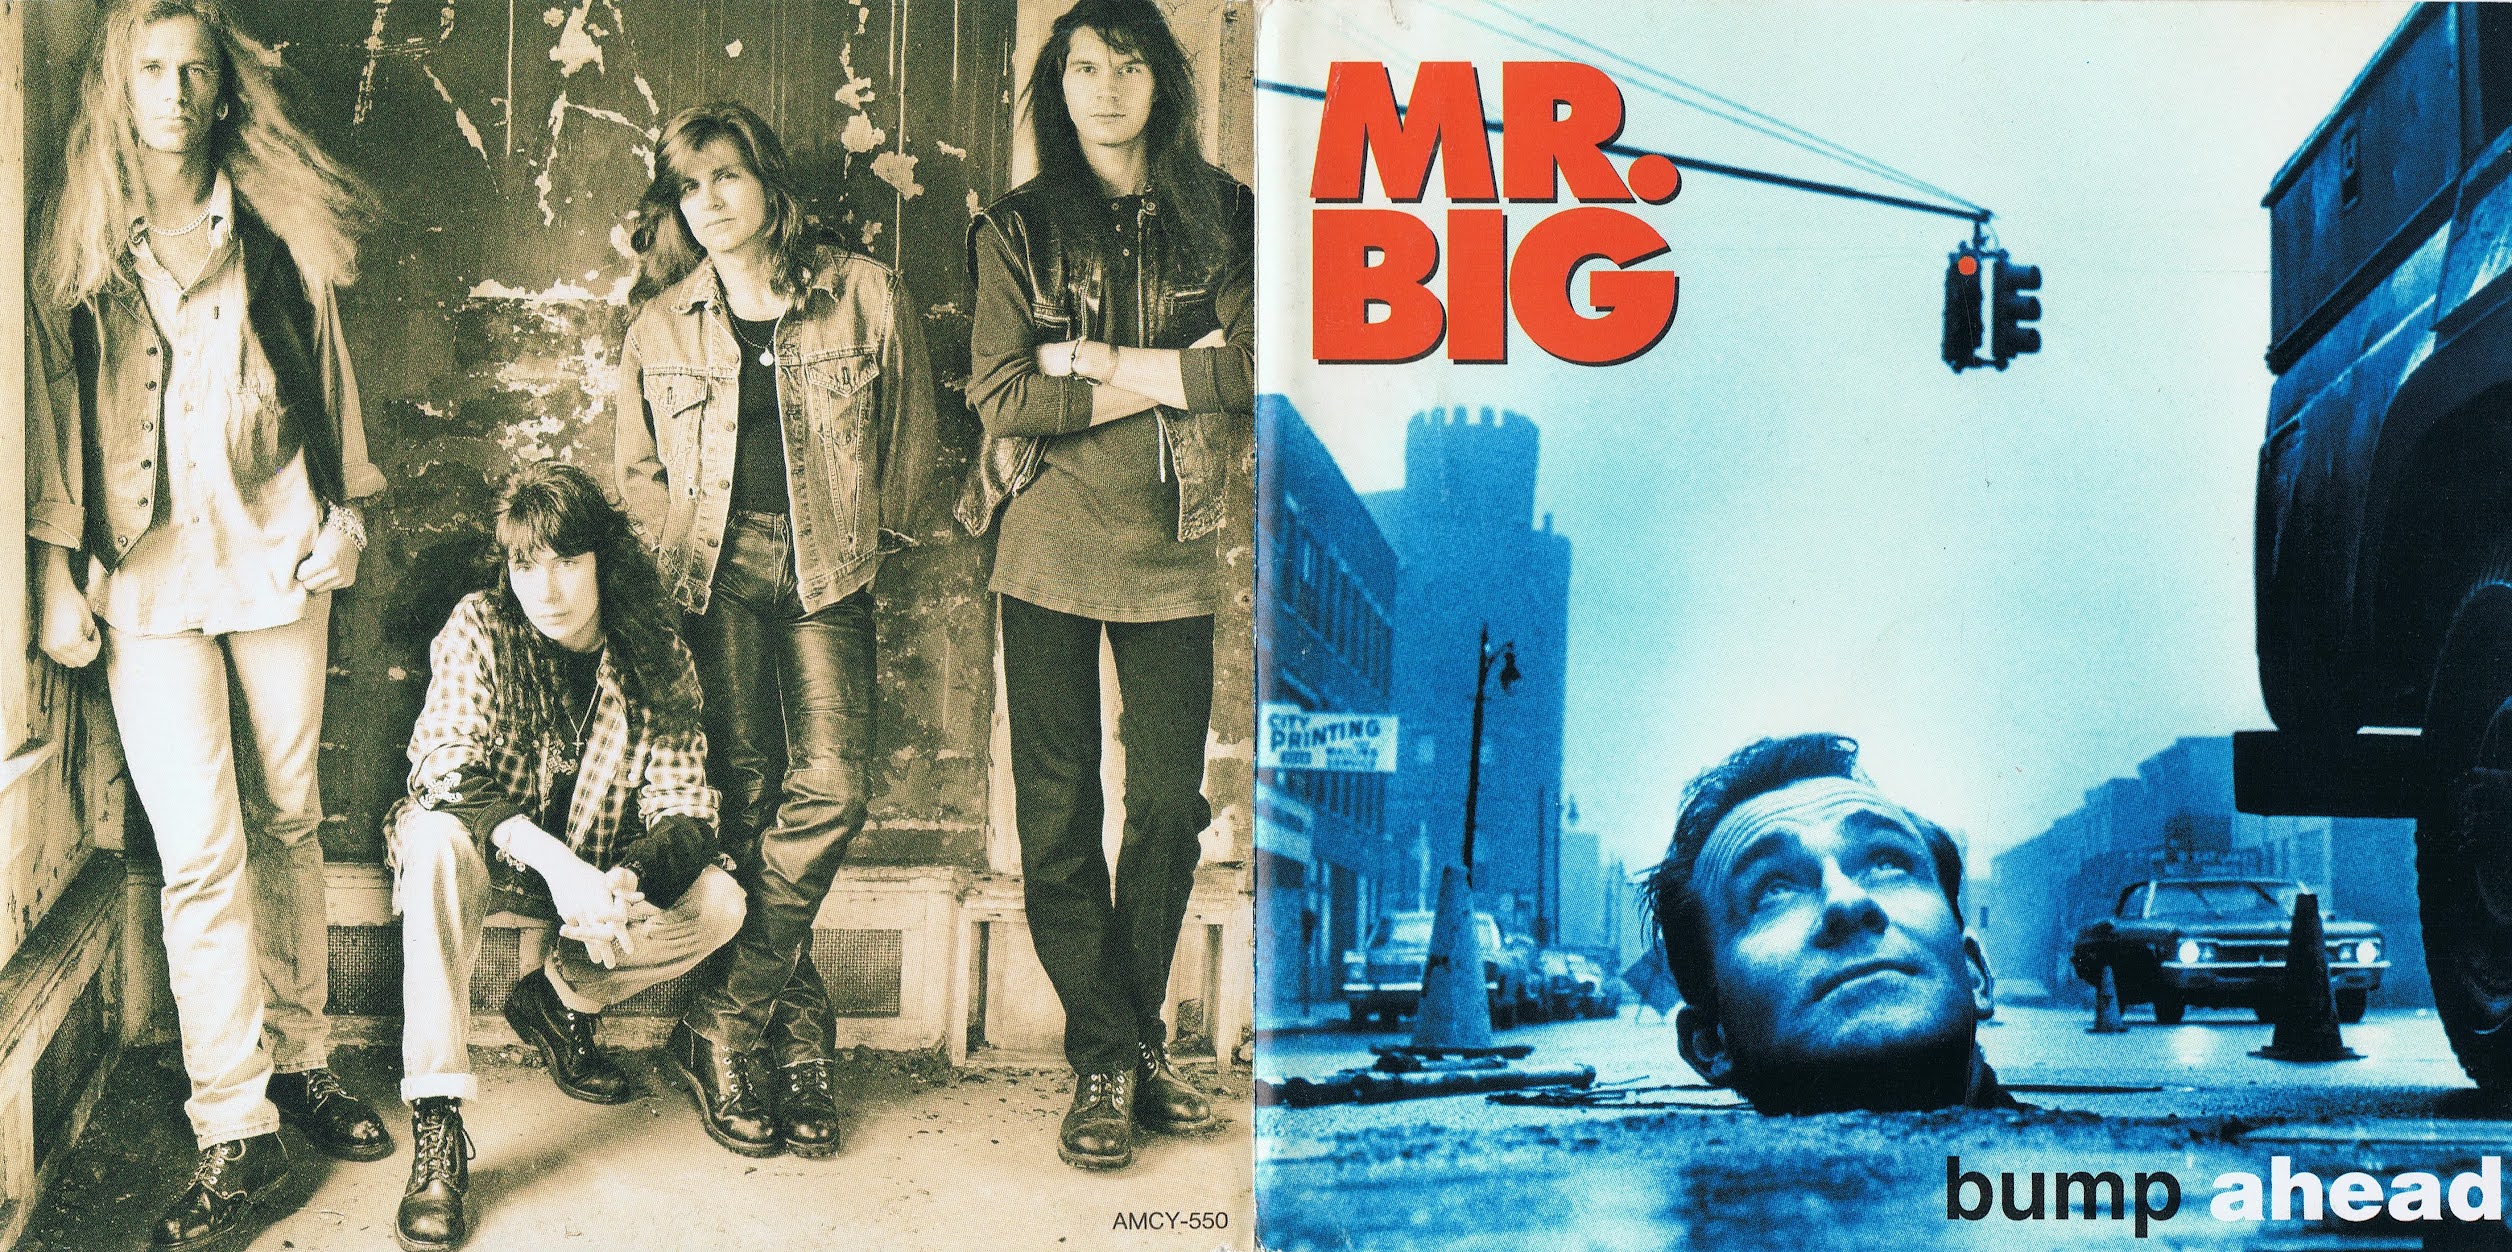 Being mr big. Mr. big 1993. Mr big 1989. Mr. big - Bump ahead (1993). Mr big Mr big 1989.